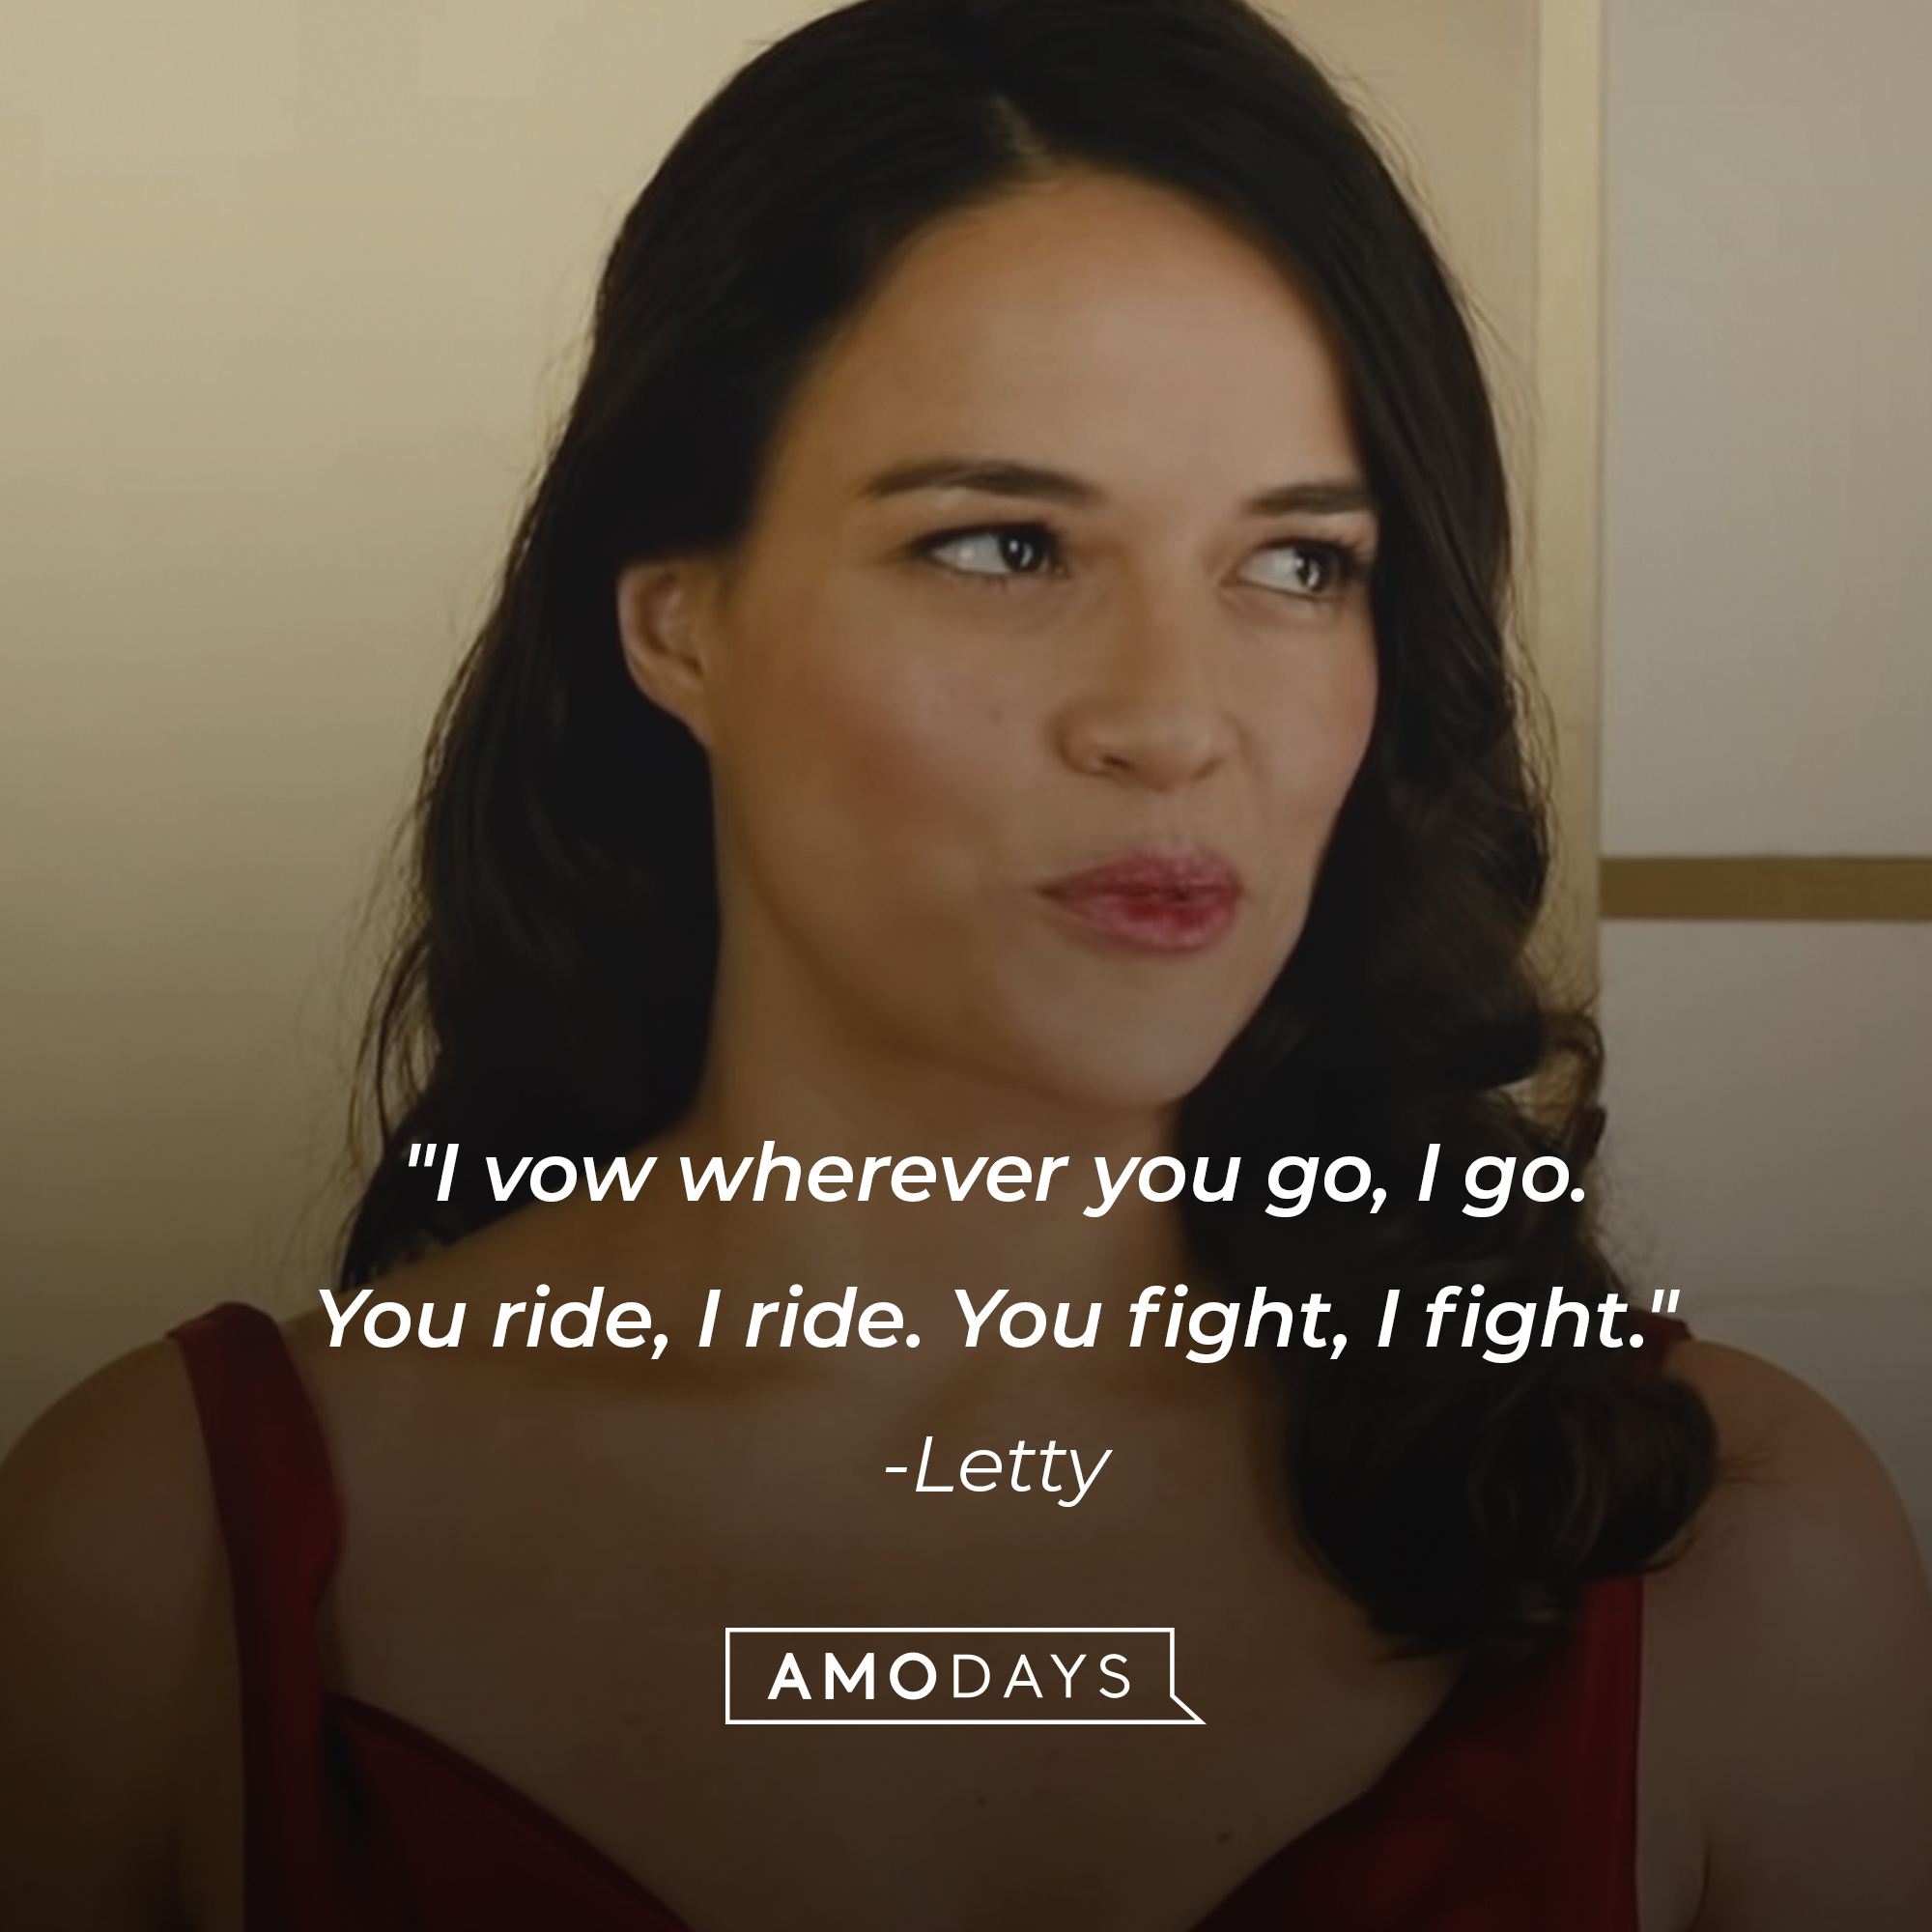 Letty's quote: "I vow wherever you go, I go. You ride, I ride. You fight, I fight." | Source: facebook.com/TheFastSaga